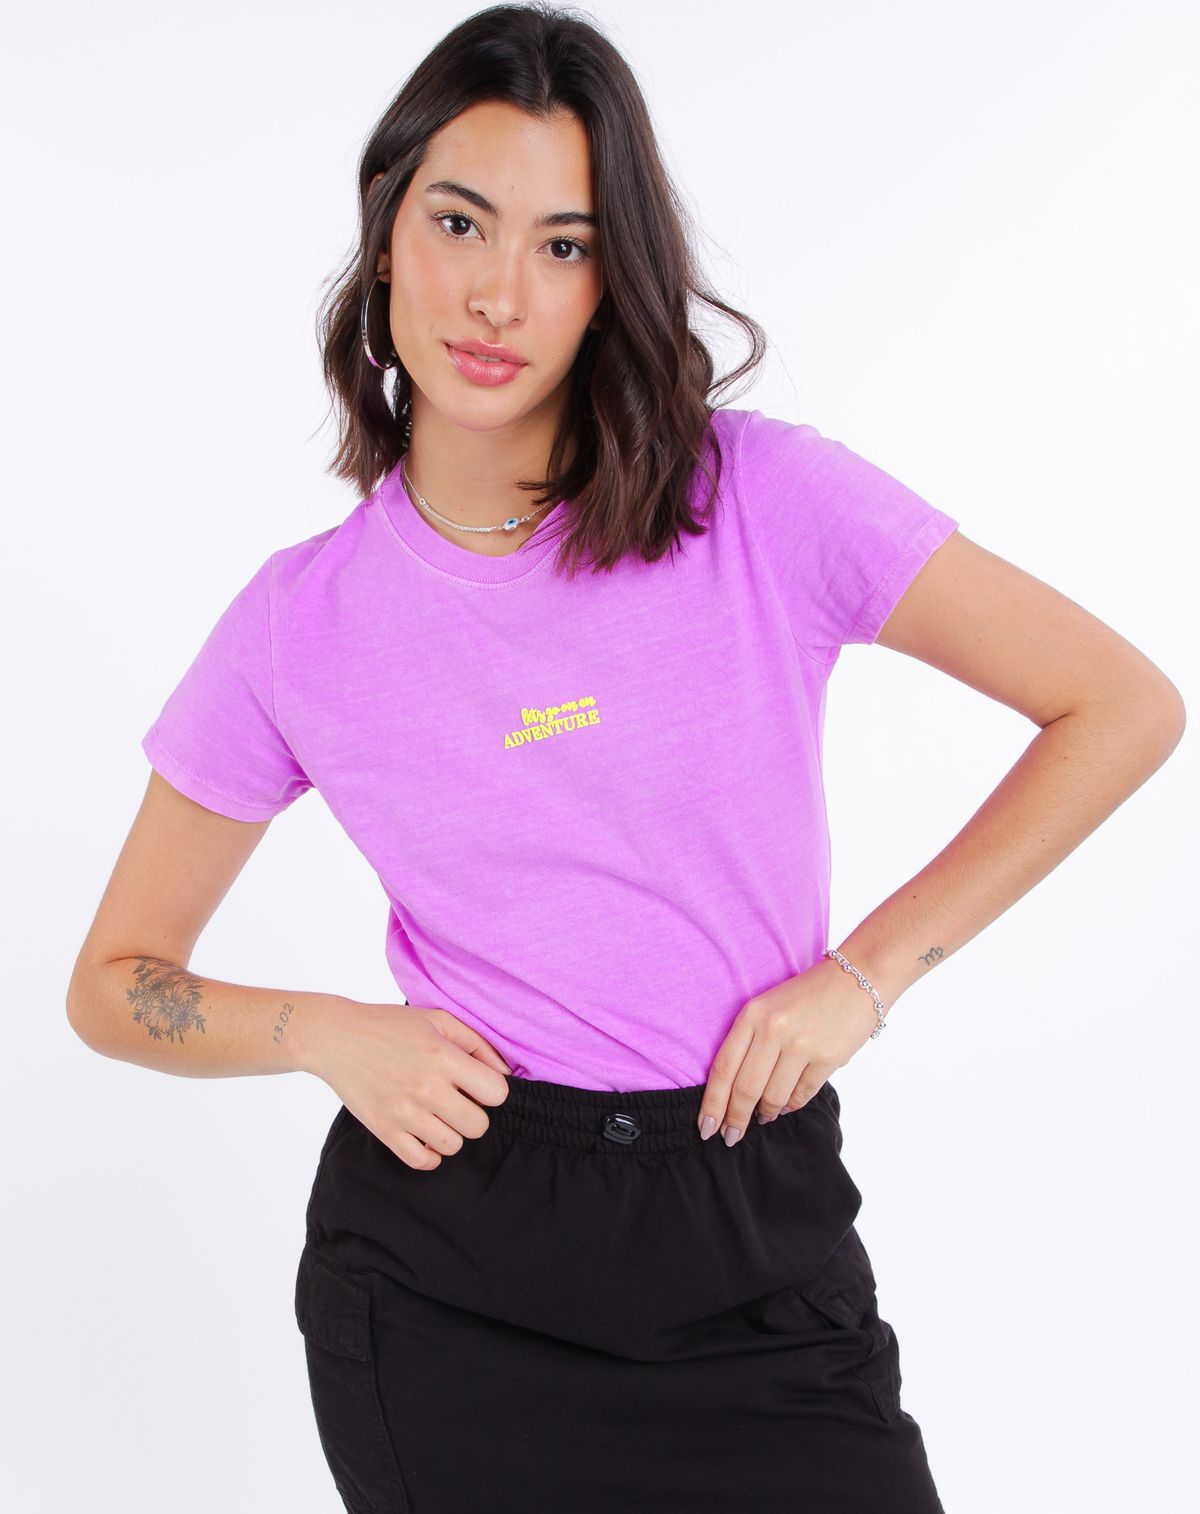 688490001-camiseta-feminina-manga-curta-decote-redondo-estampada-lilas-p-e82